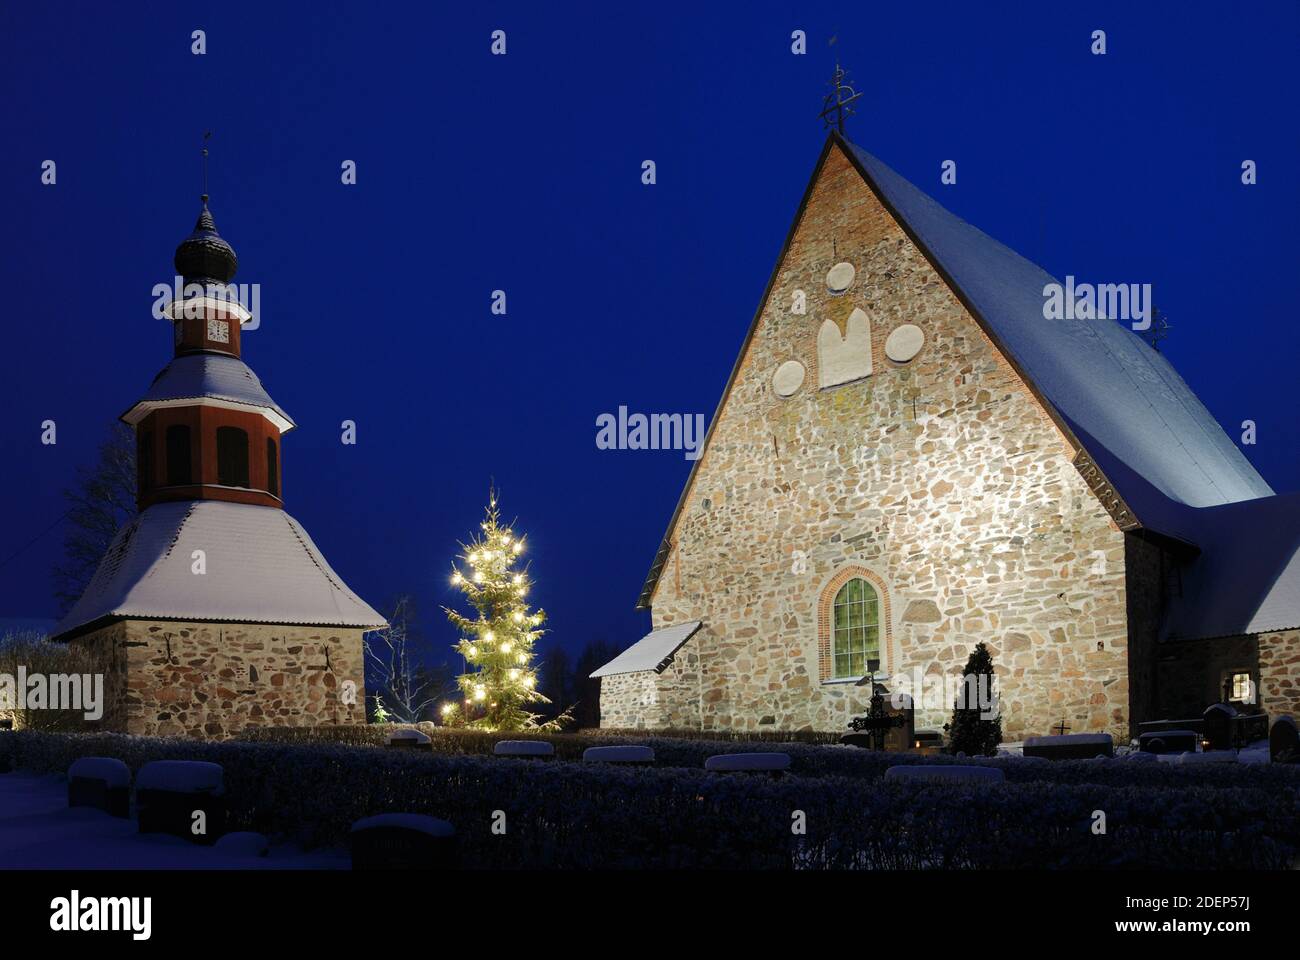 christmas night scenery in Finland in Pernio, church in snow, xmas tree Stock Photo